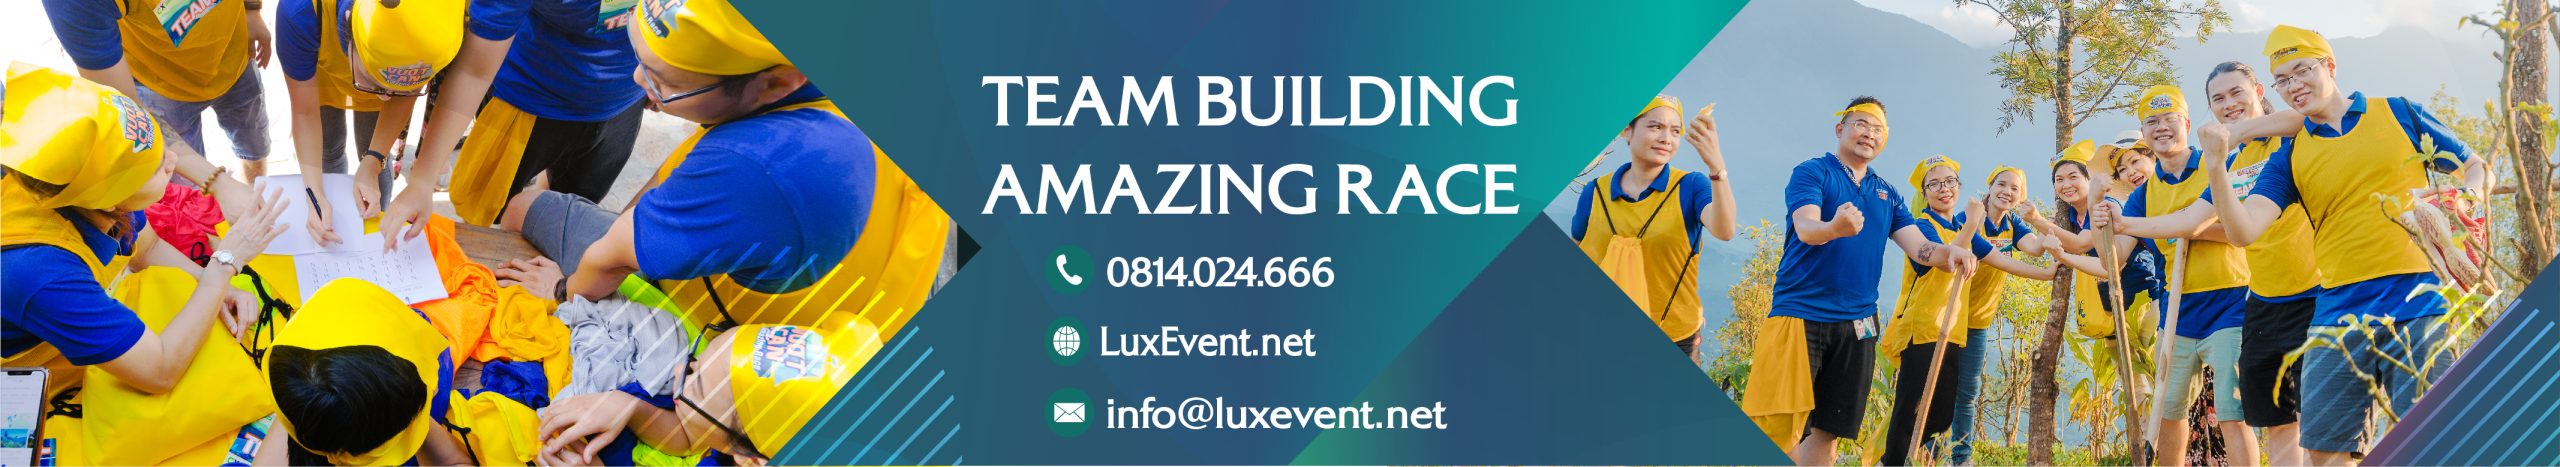 banner team building Amazing Race